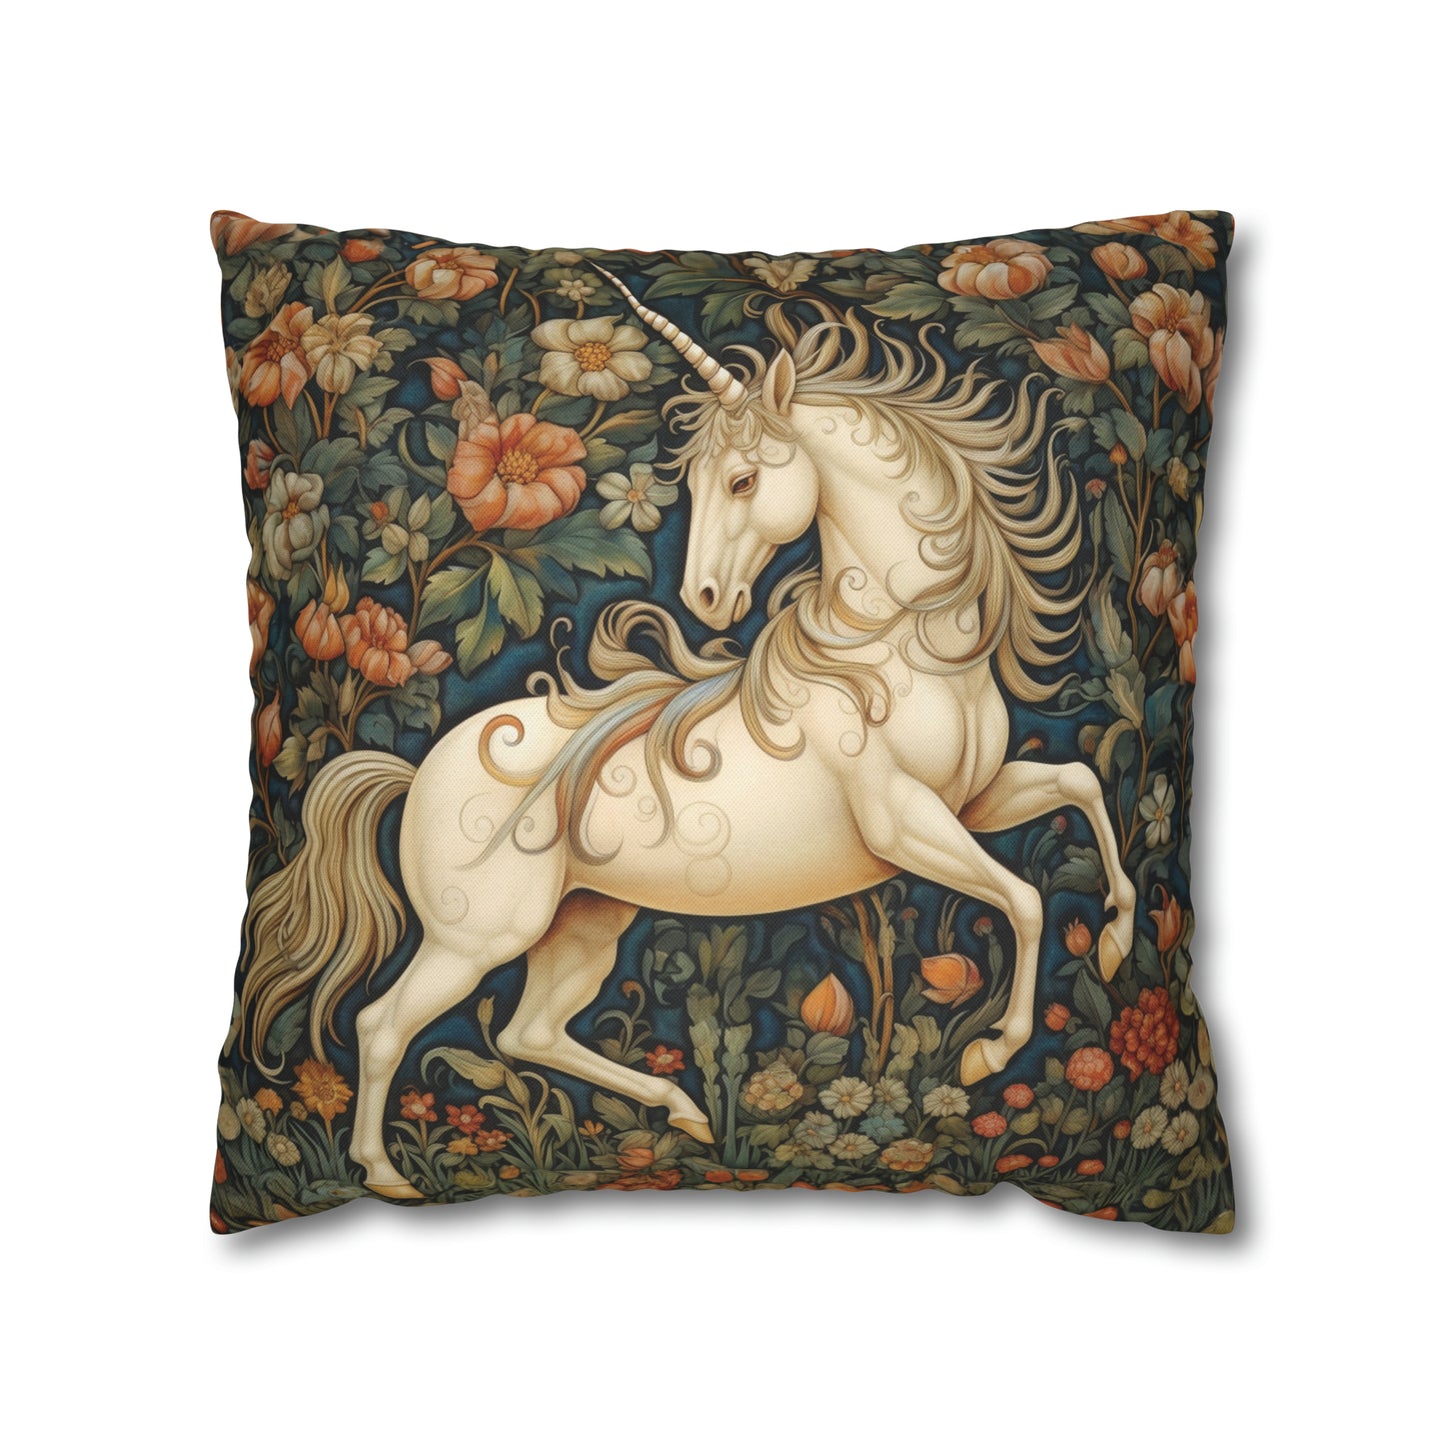 Unicorn Garden William Morris Inspired Floral Pillow